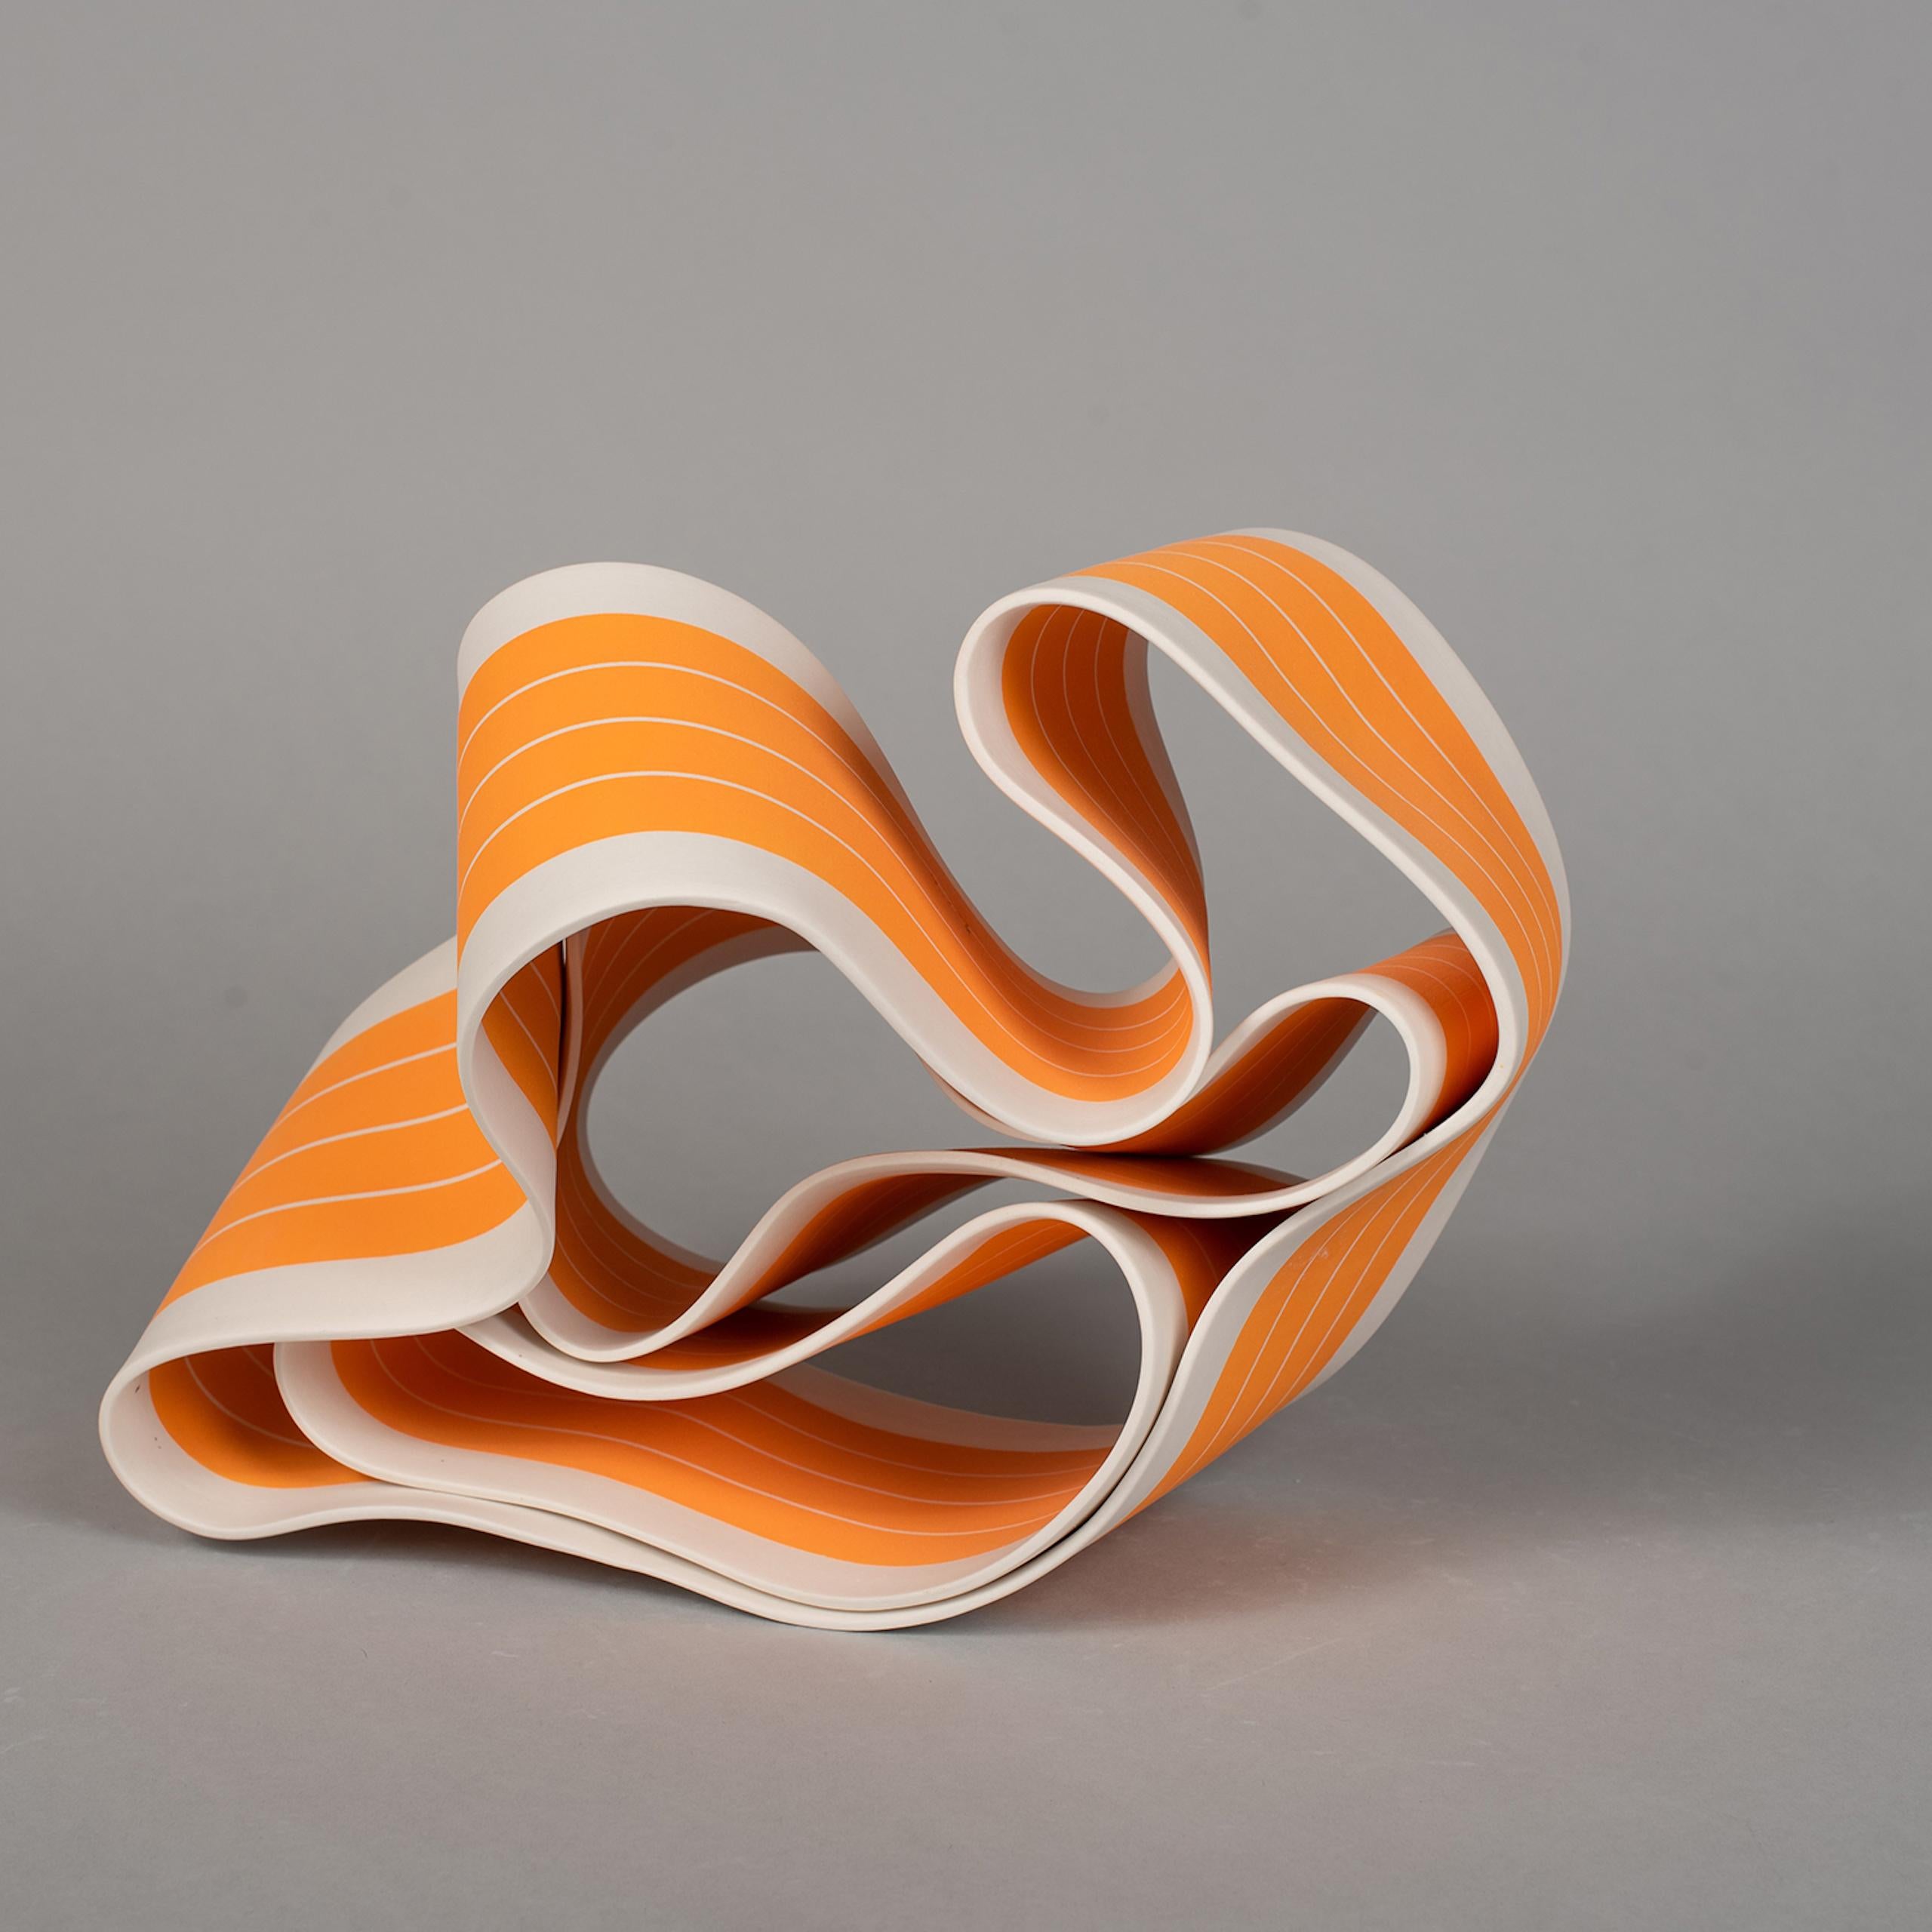 Folding in Motion 5 by Simcha Even-Chen - Porcelain sculpture, orange, line For Sale 3